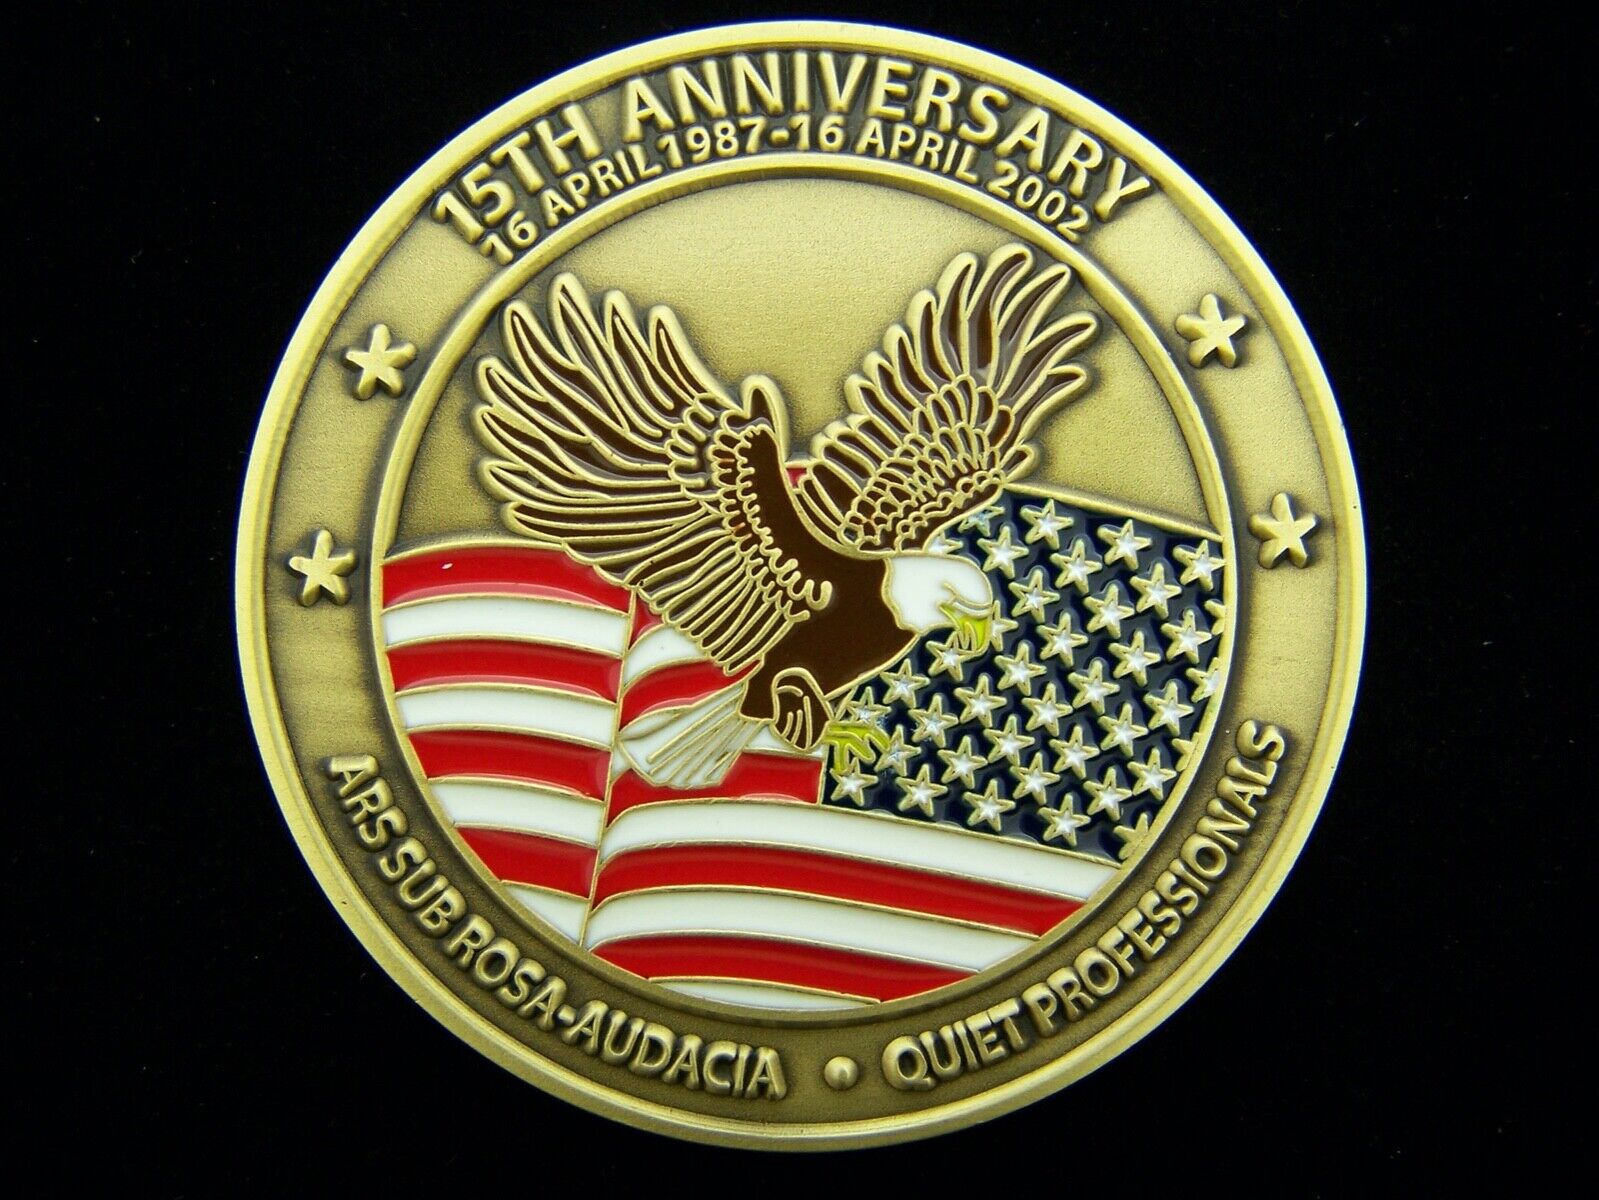 USSOCOM SOCOM 15th Anniversary 1987 - 2002 Quiet Professionals Challenge Coin